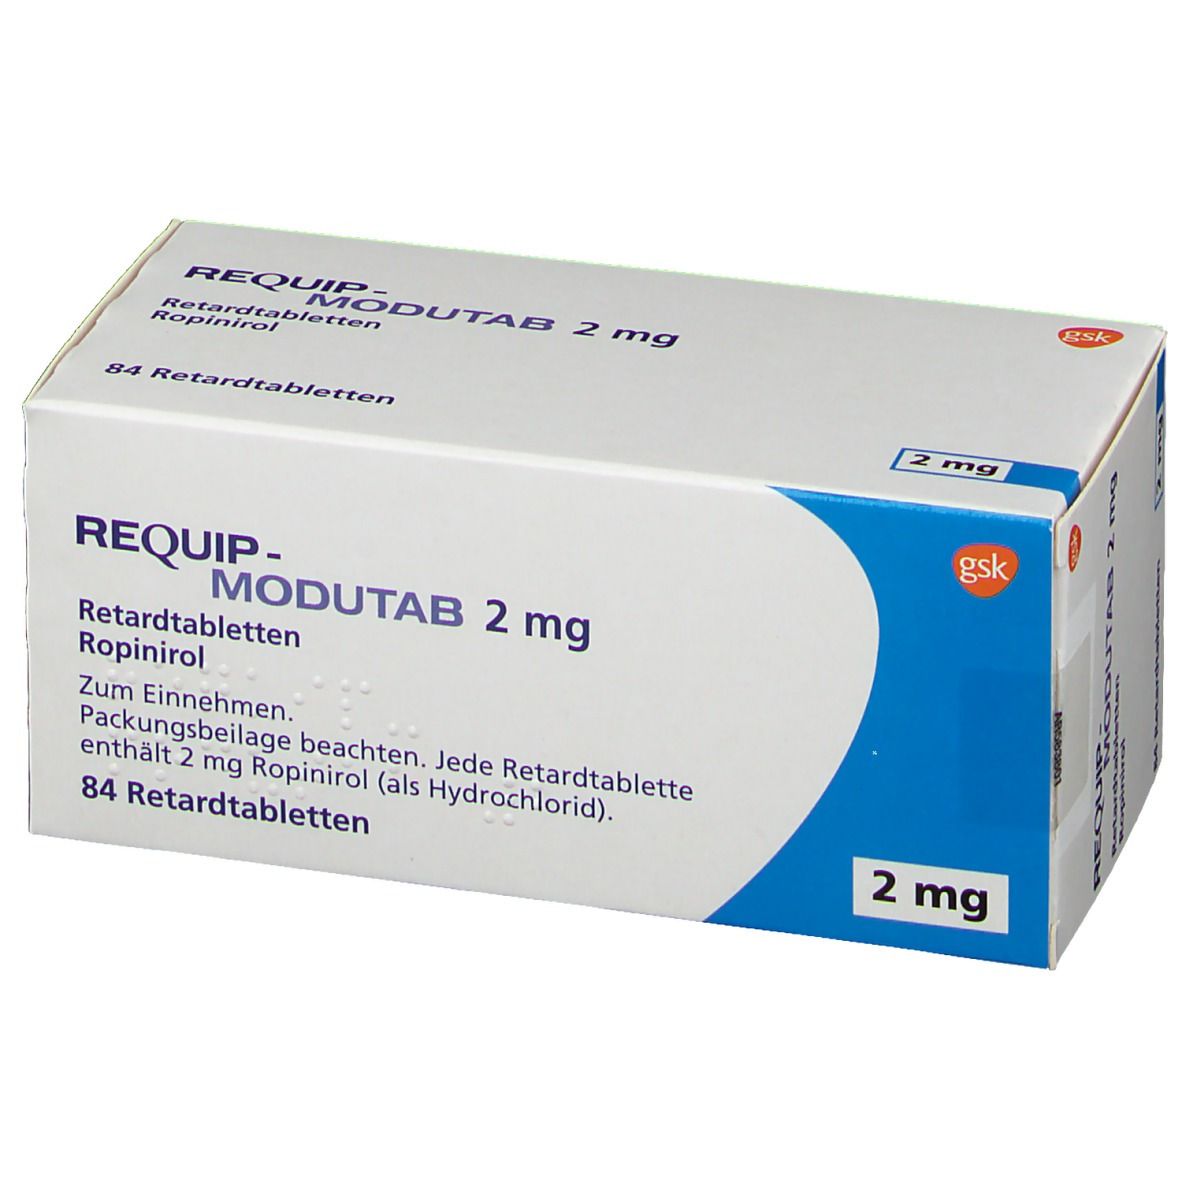 REQUIP® - MODUTAB® 2 mg